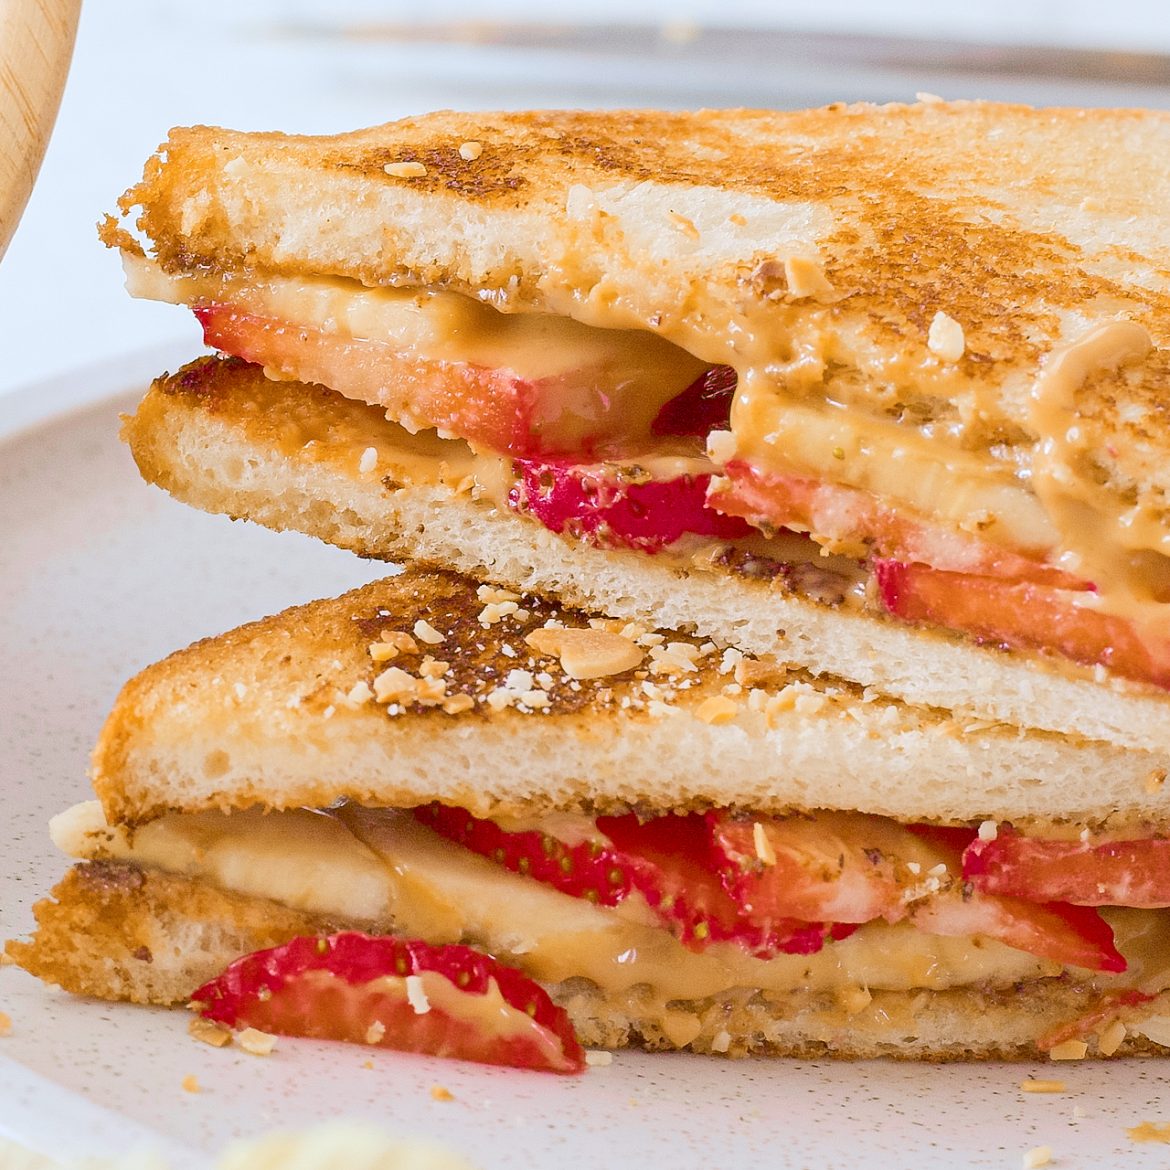 Peanut butter sandwich recipe